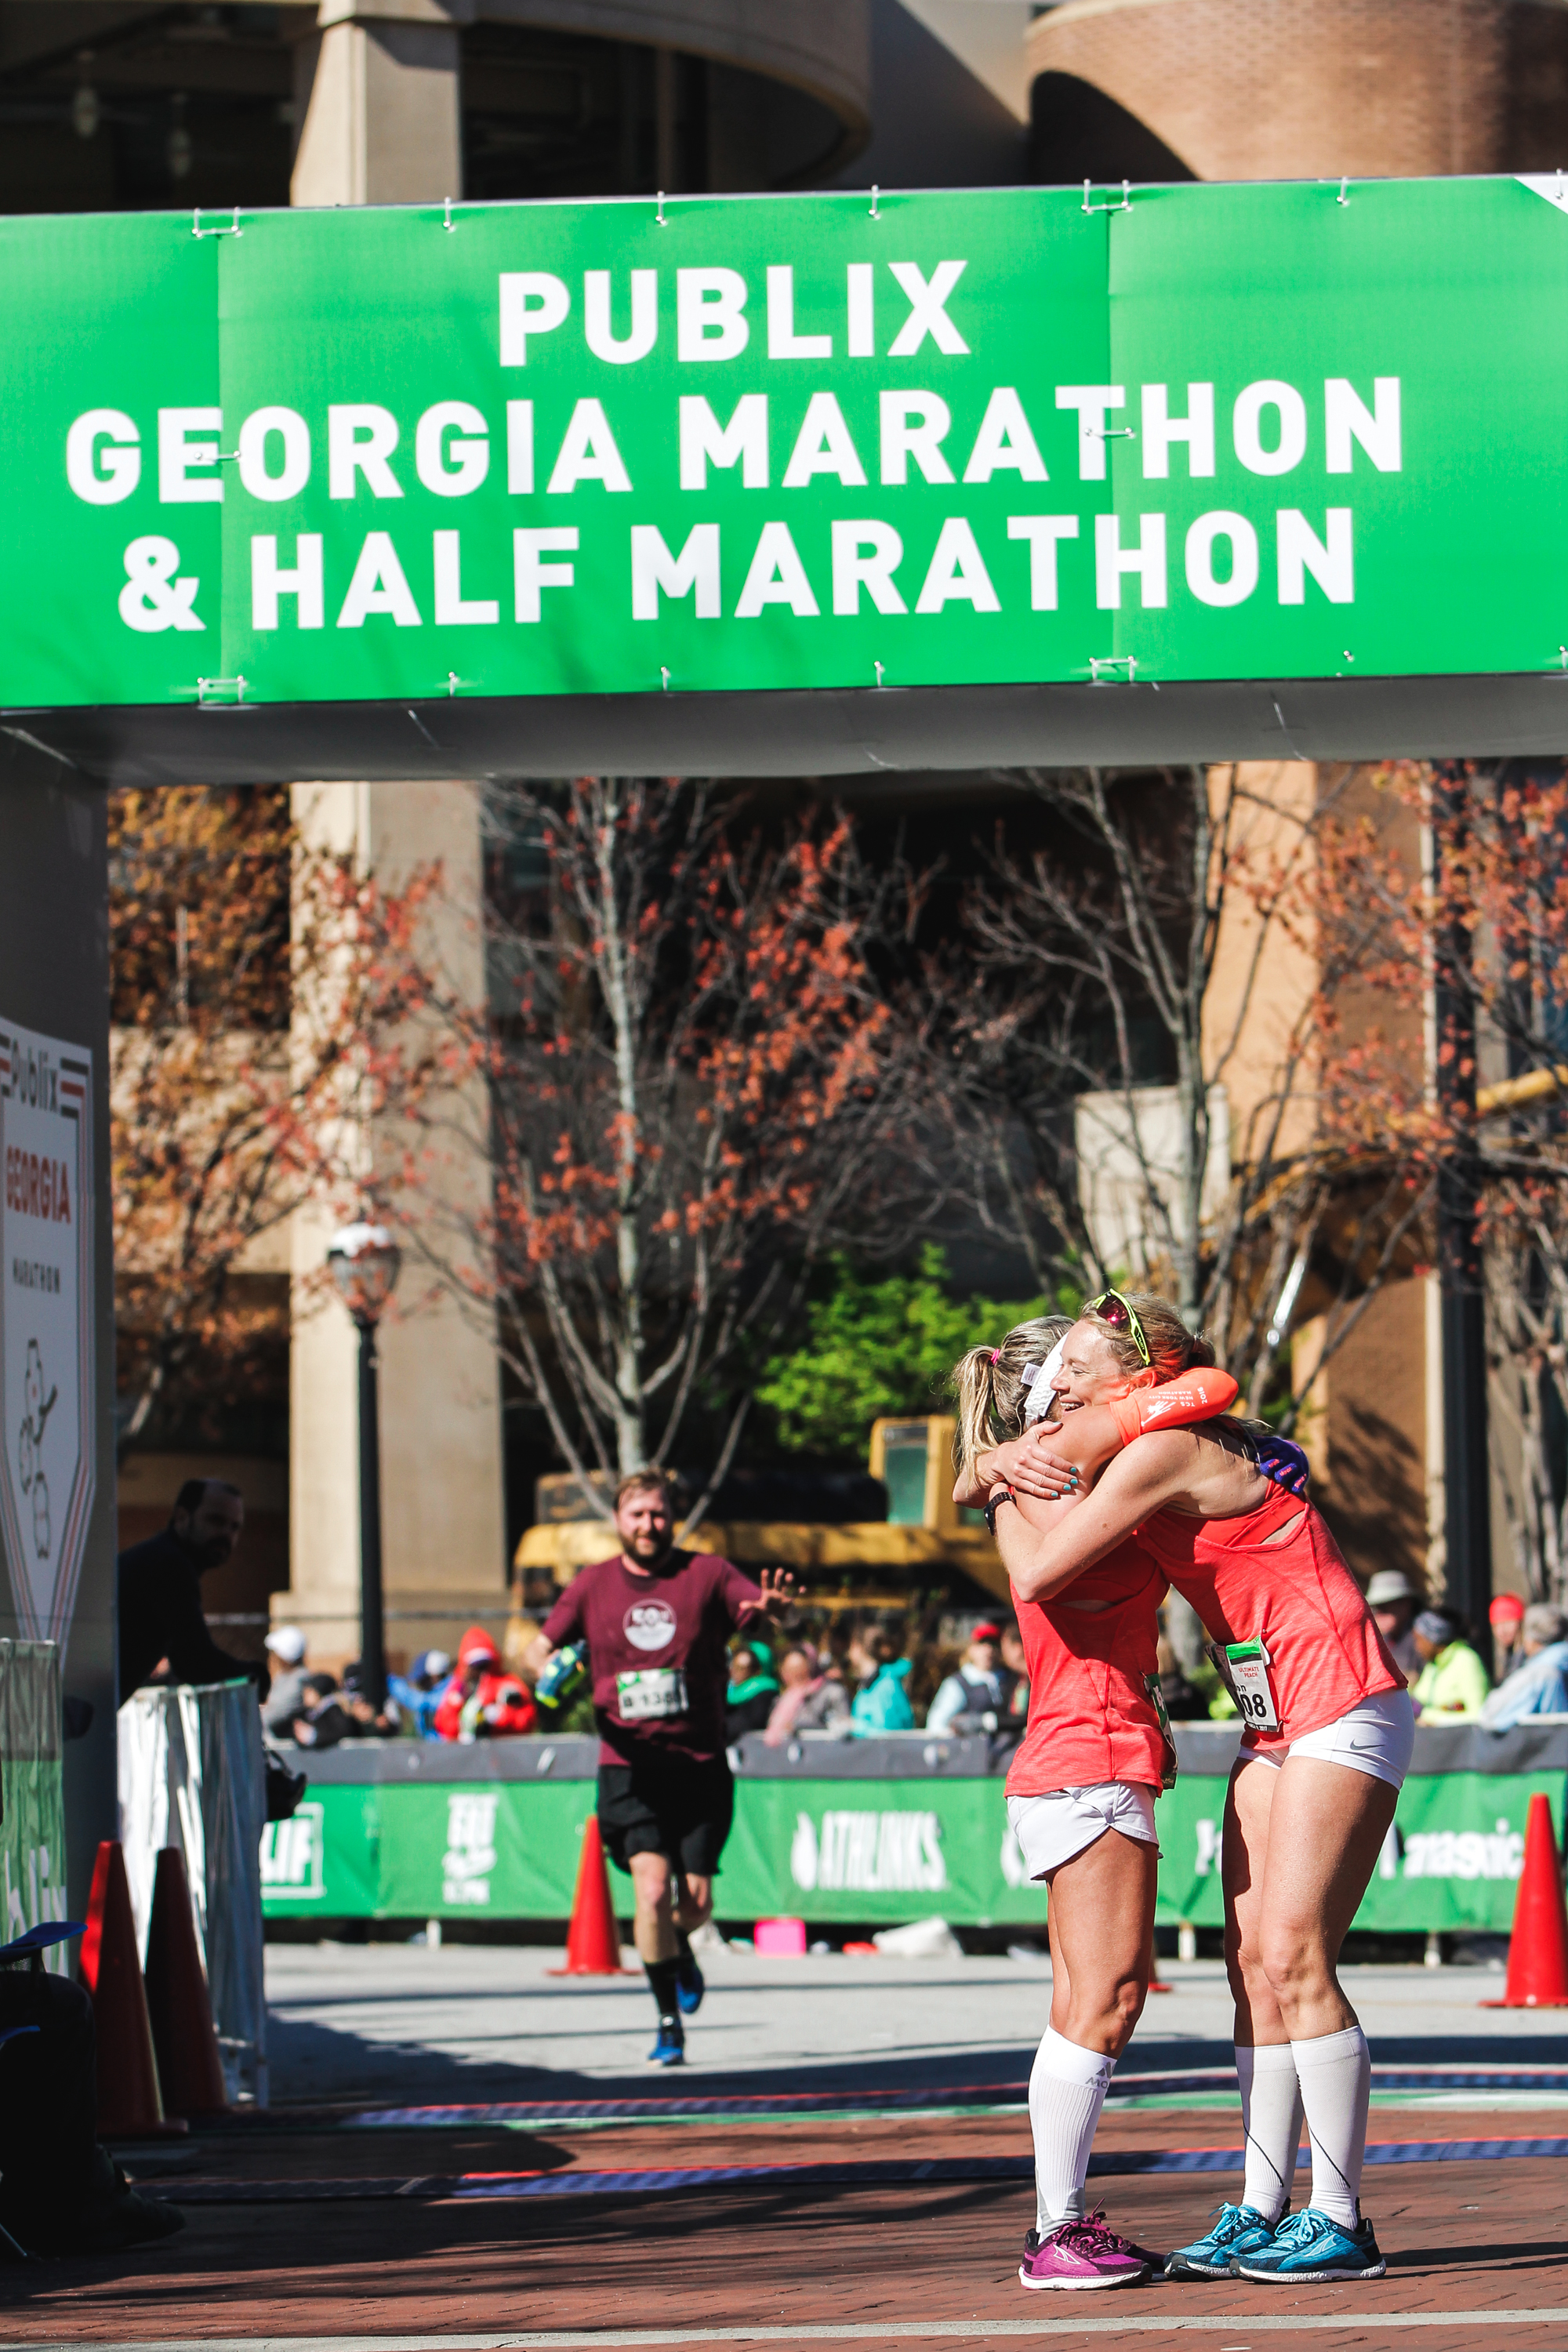 Publix Georgia Marathon & Half Marathon in Atlanta, GA